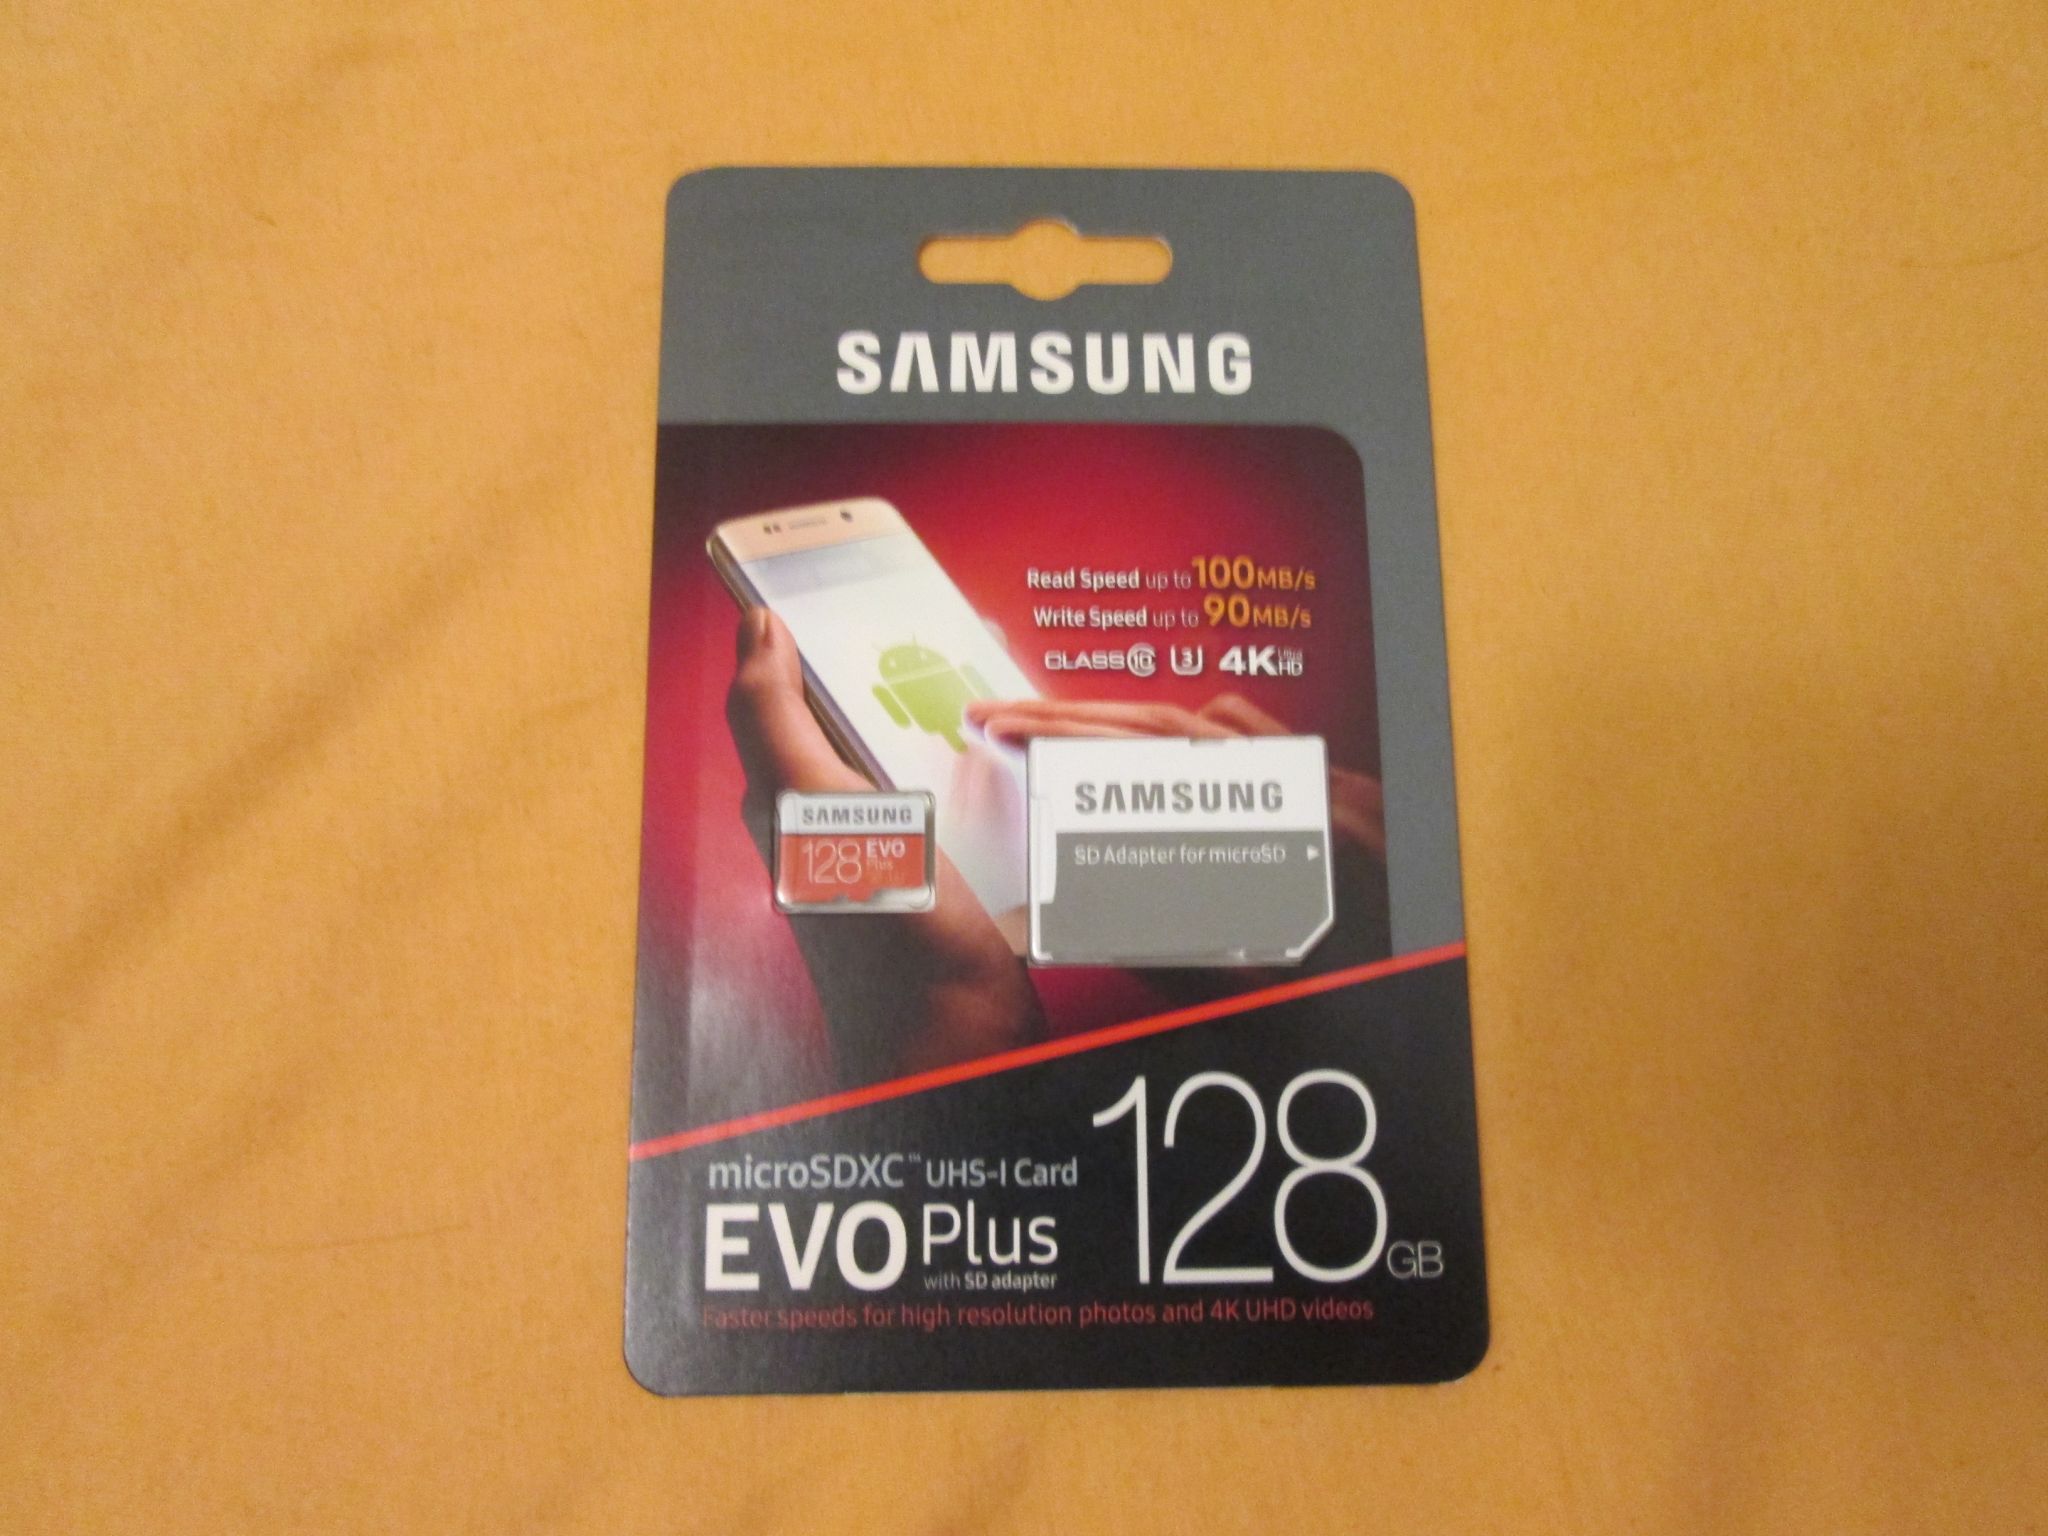 Microsdxc samsung 128gb. Samsung EVO class 10 u3 64gb. Samsung MICROSDXC EVO Plus 128gb. Карта памяти Samsung EVO Plus 128 ГБ. Samsung EVO MICROSD 128gb.